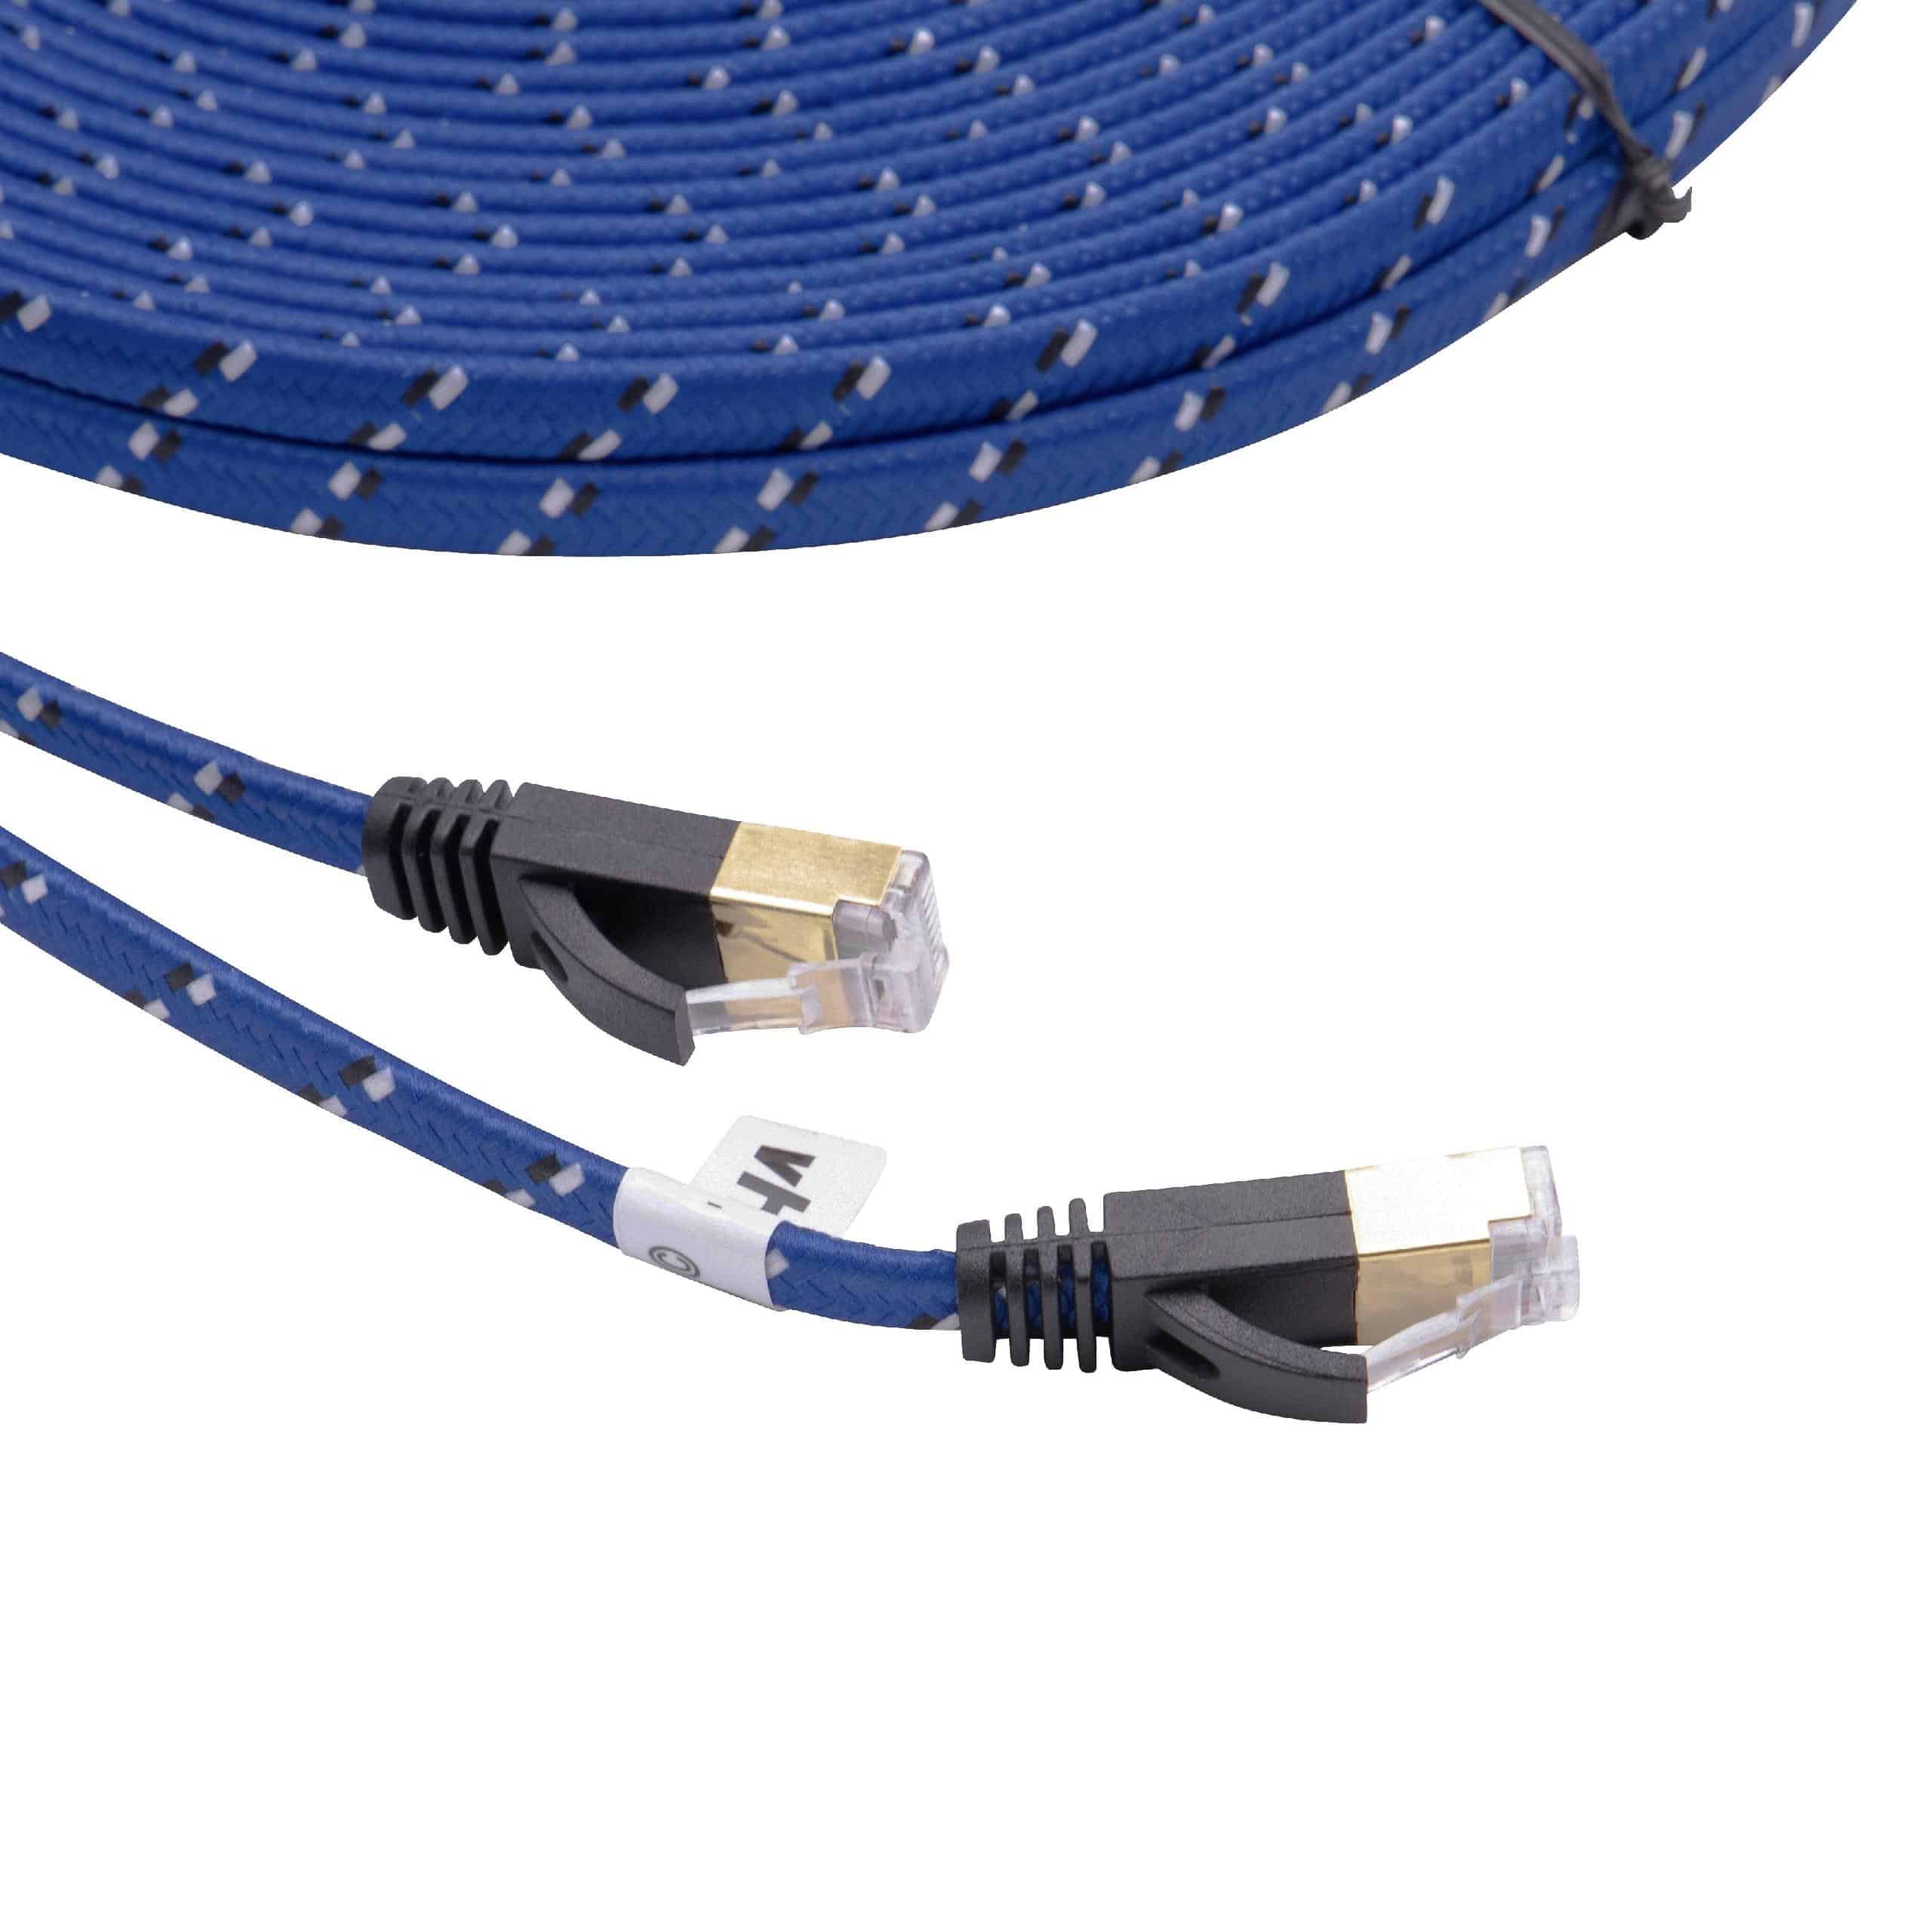 Cavo Ethernet, cavo di rete, cavo LAN, cavo patch Cat7 20m blu - cavo piatto